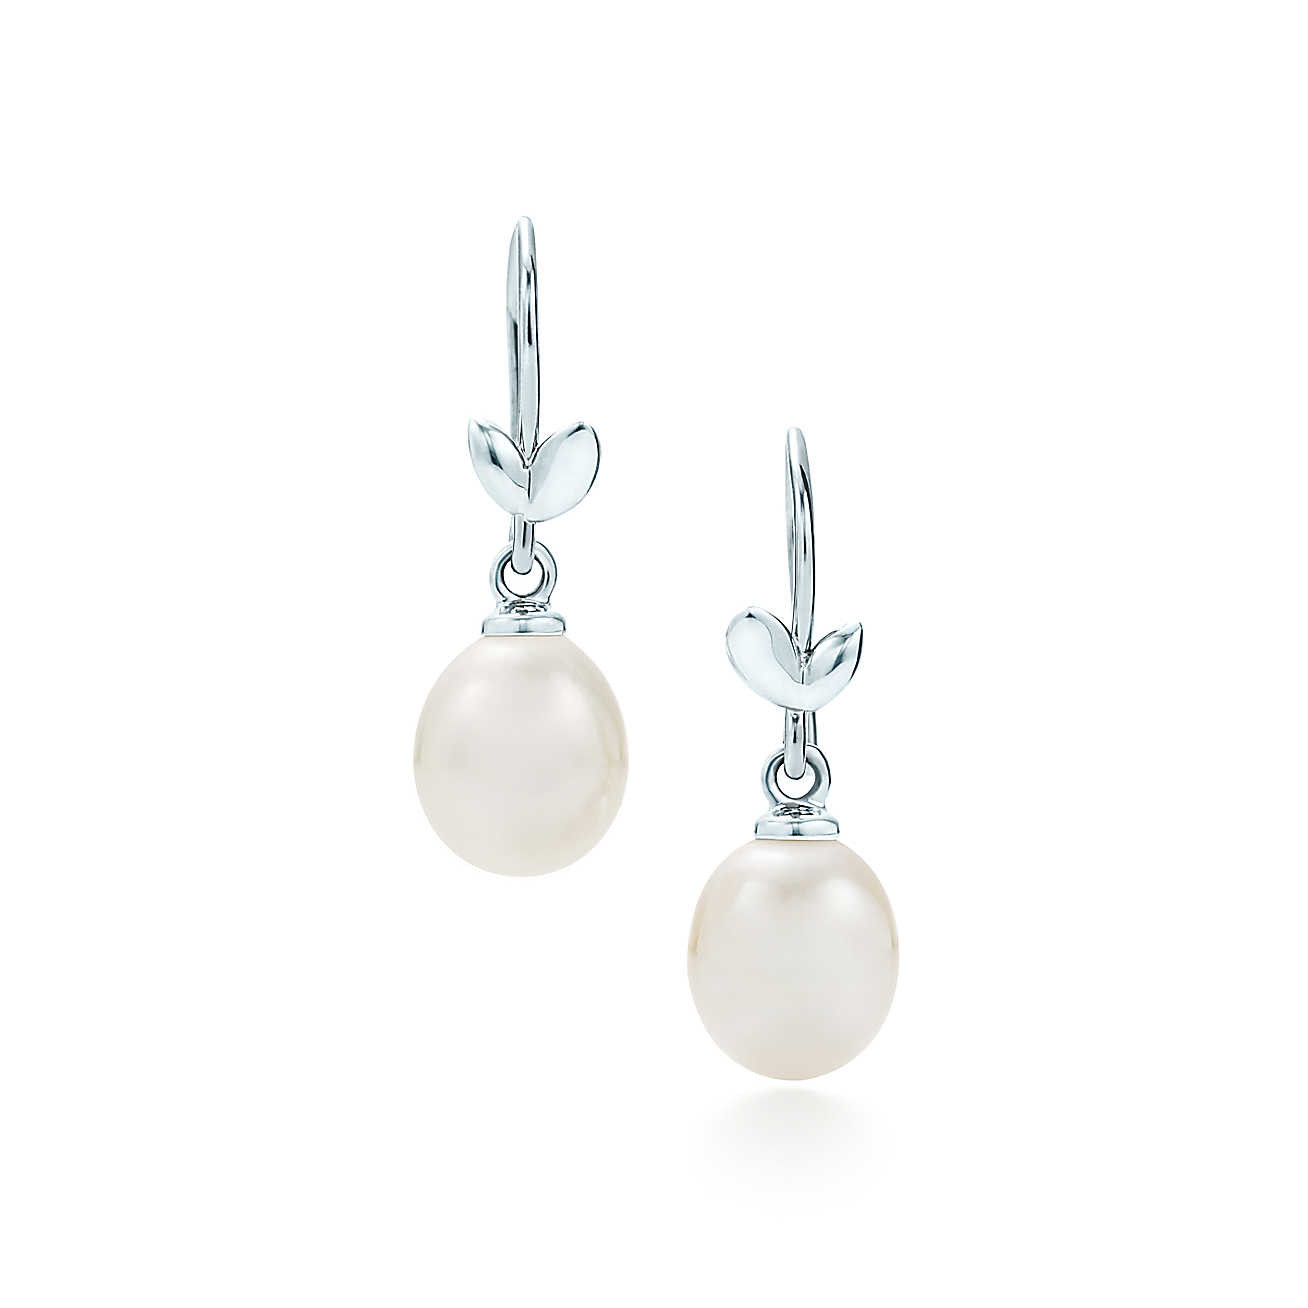 Tiffany Pearl Earrings
 Paloma Picasso Olive Leaf drop earrings in sterling